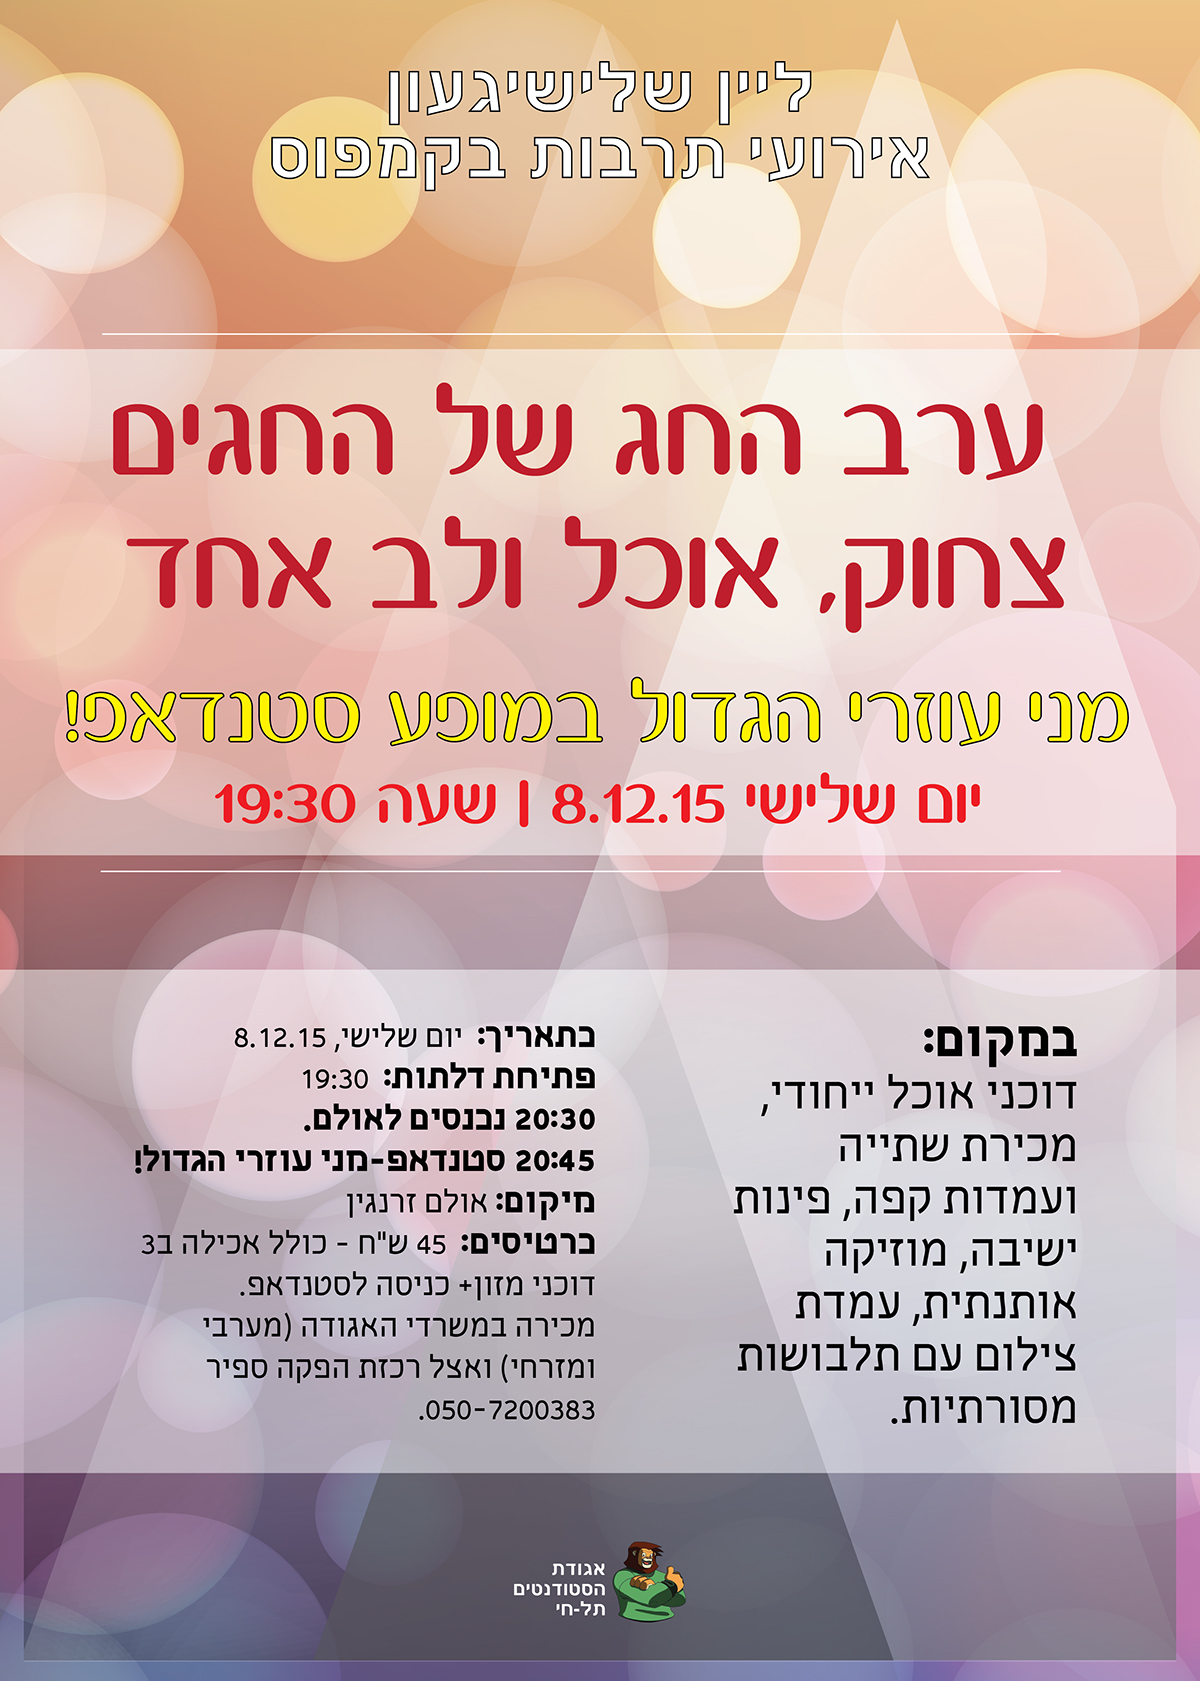 Tel Hai  student association cover poster calture Event design Moran Bazaz pandesign studio